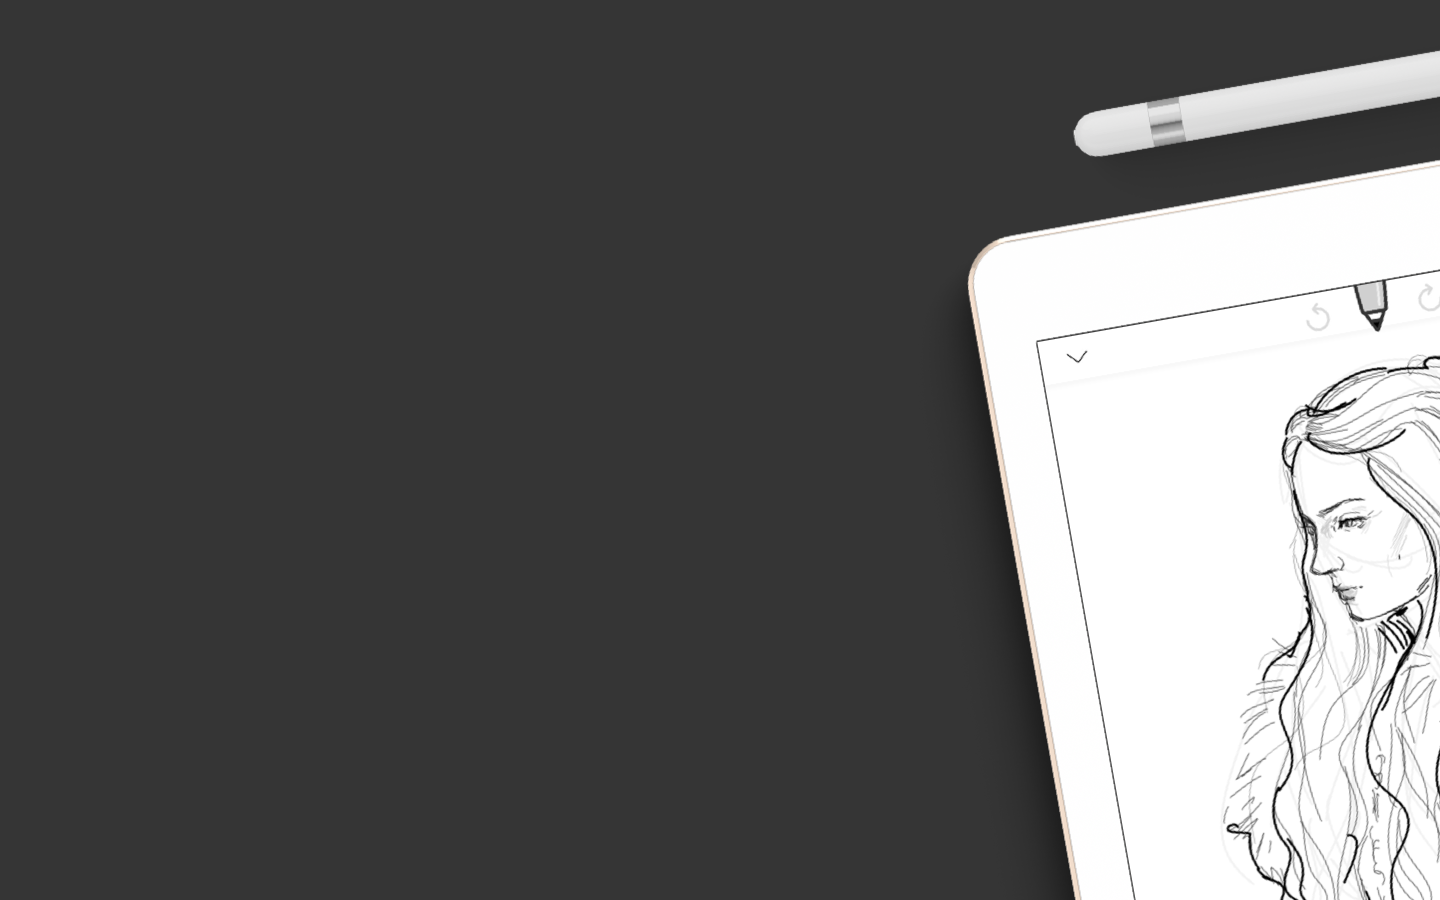 iPad Pro Mockup Freebie - Download Sketch Resource - Sketch Repo